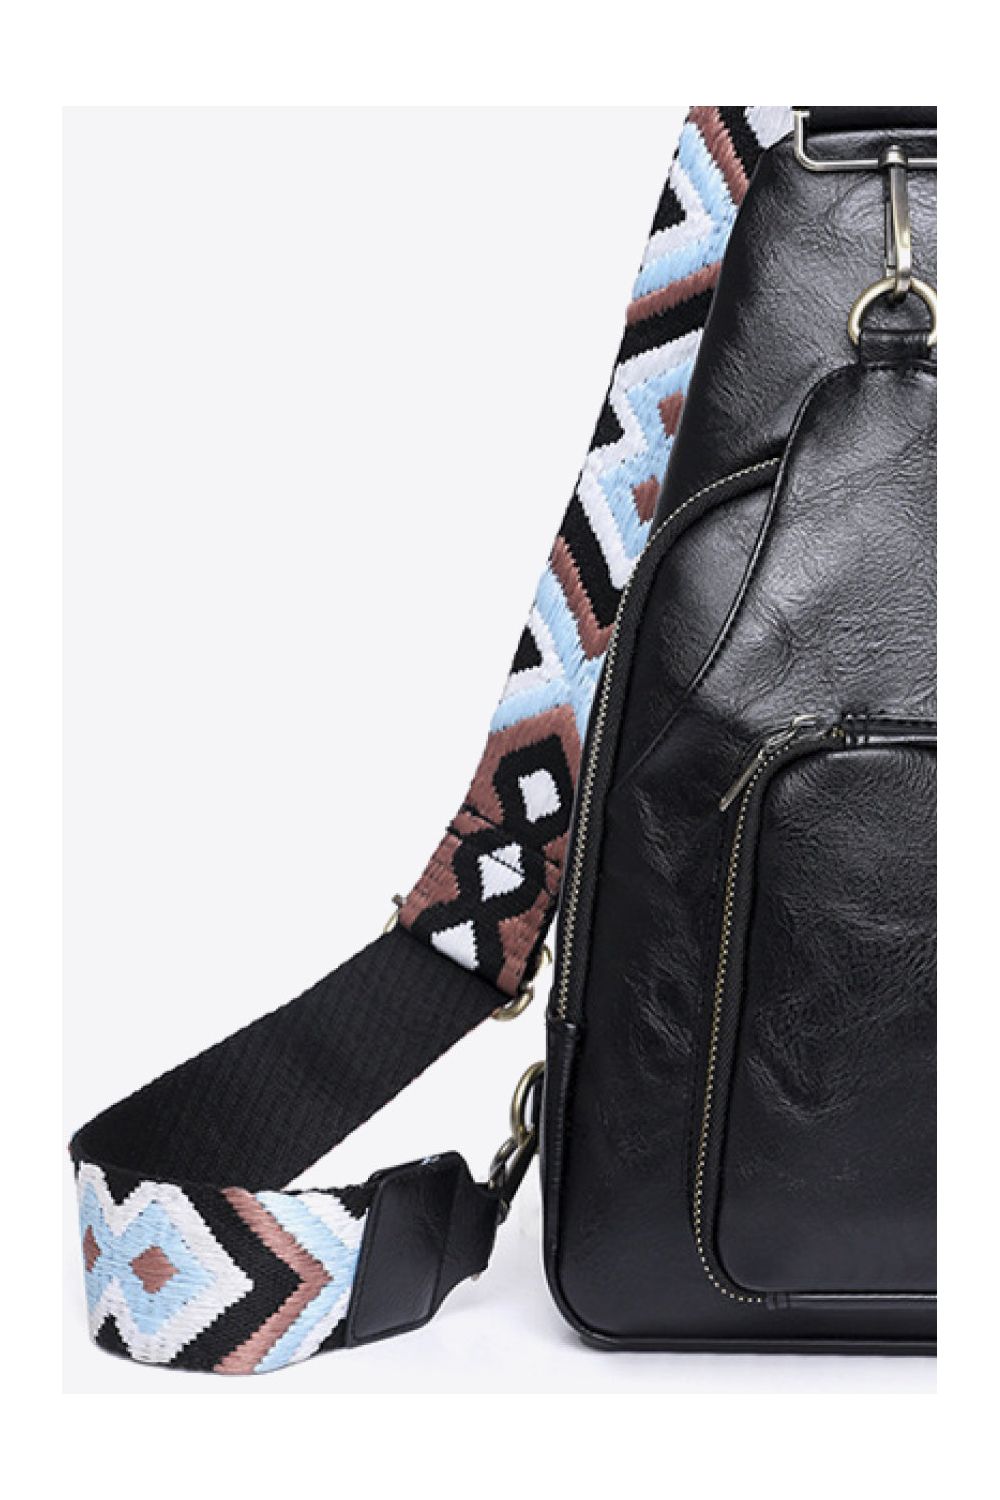 Women Adored Take A Trip PU Leather Ochre Colored Sling Bag - NicholesGifts.online